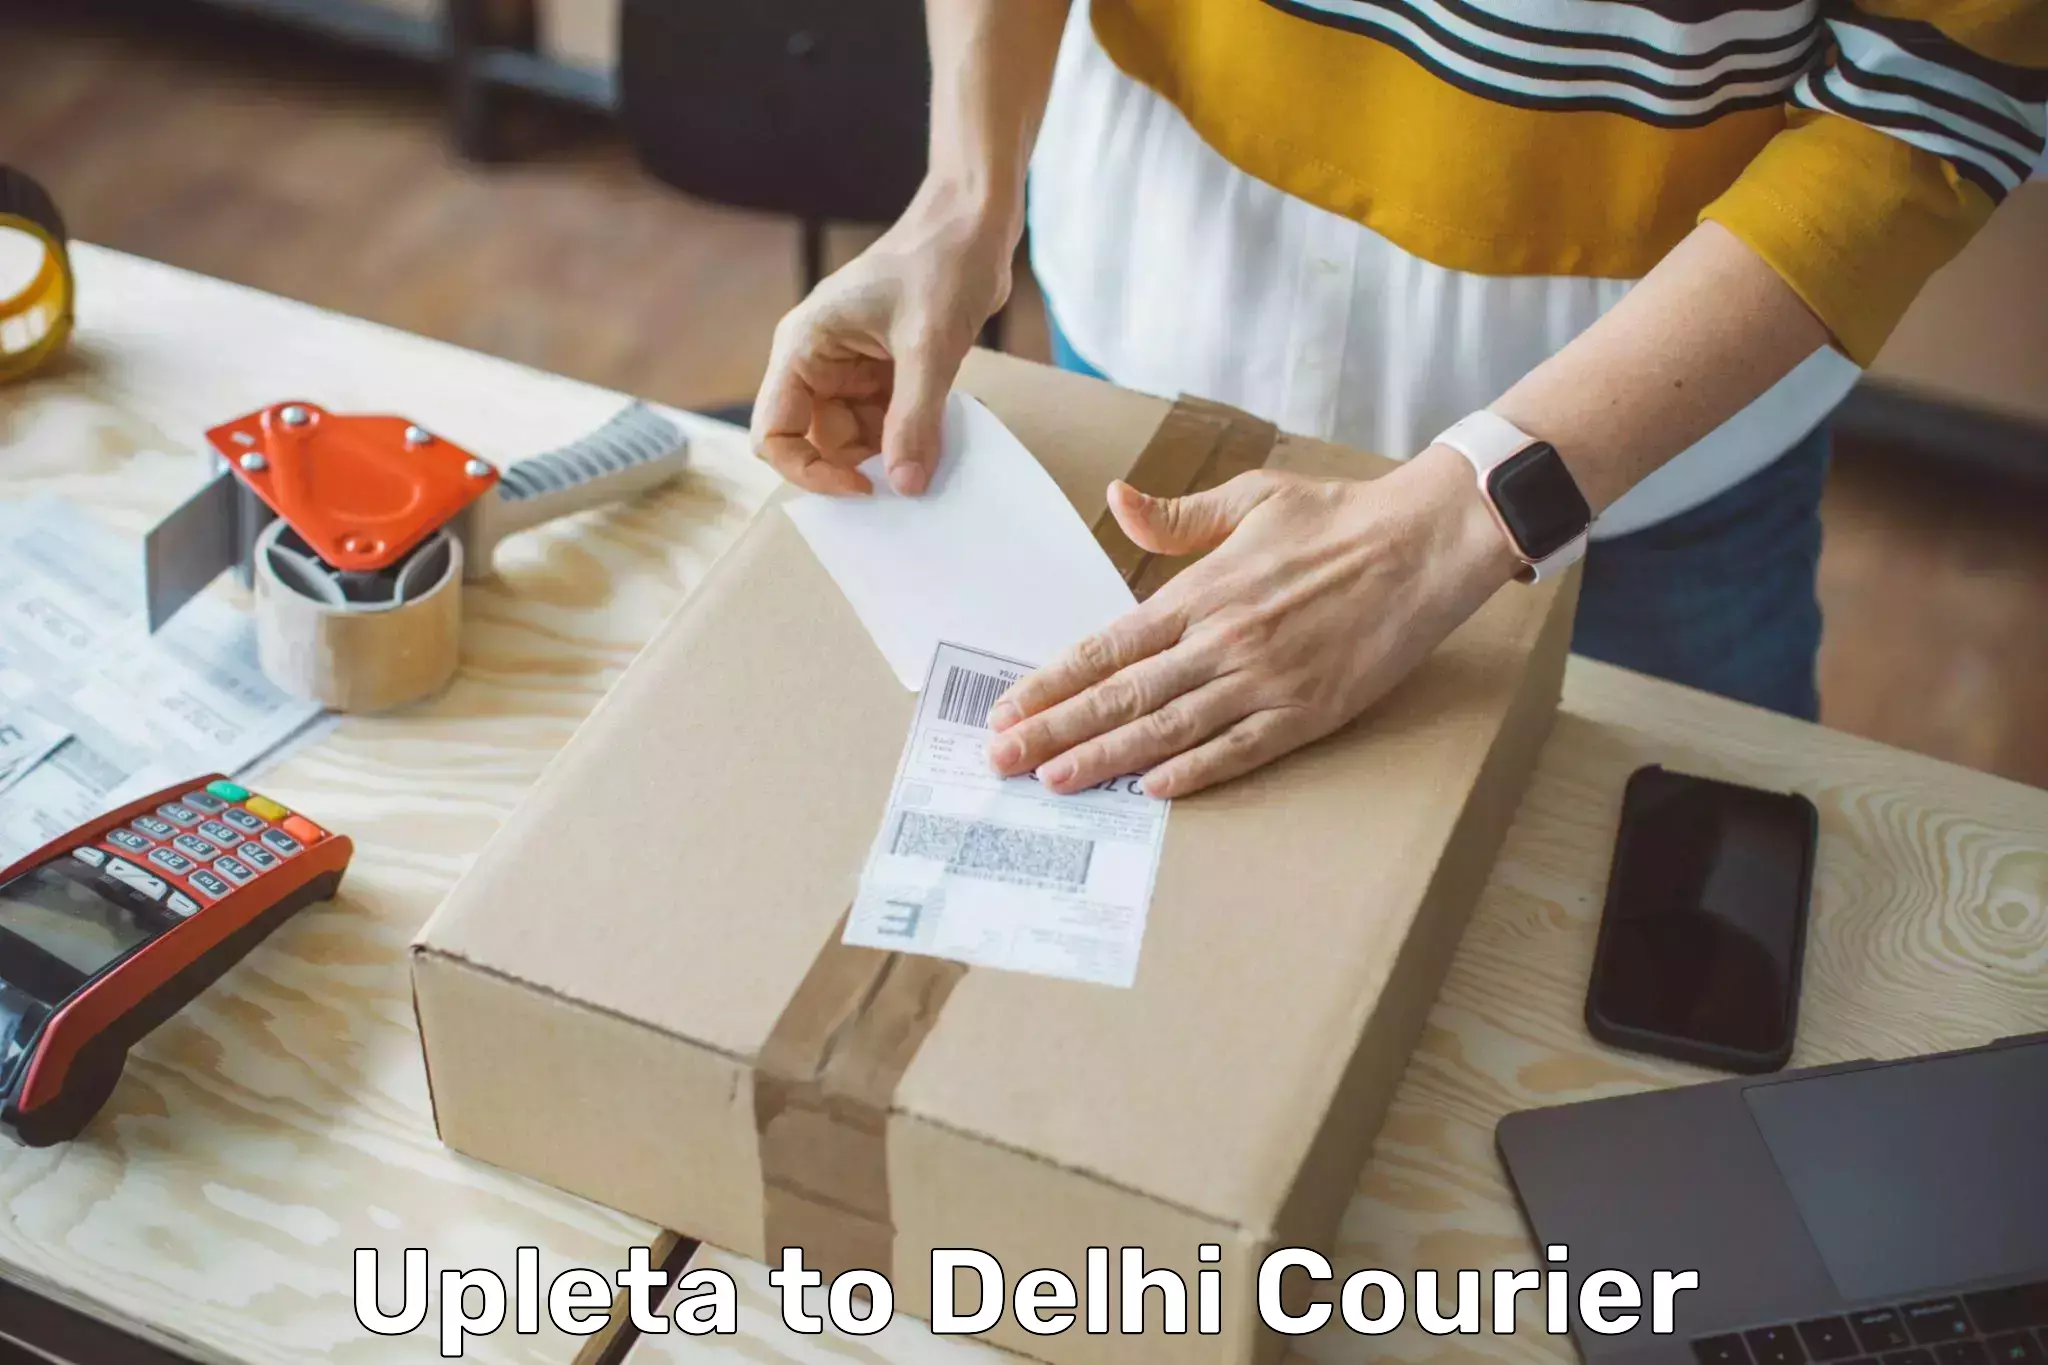 Local delivery service Upleta to University of Delhi